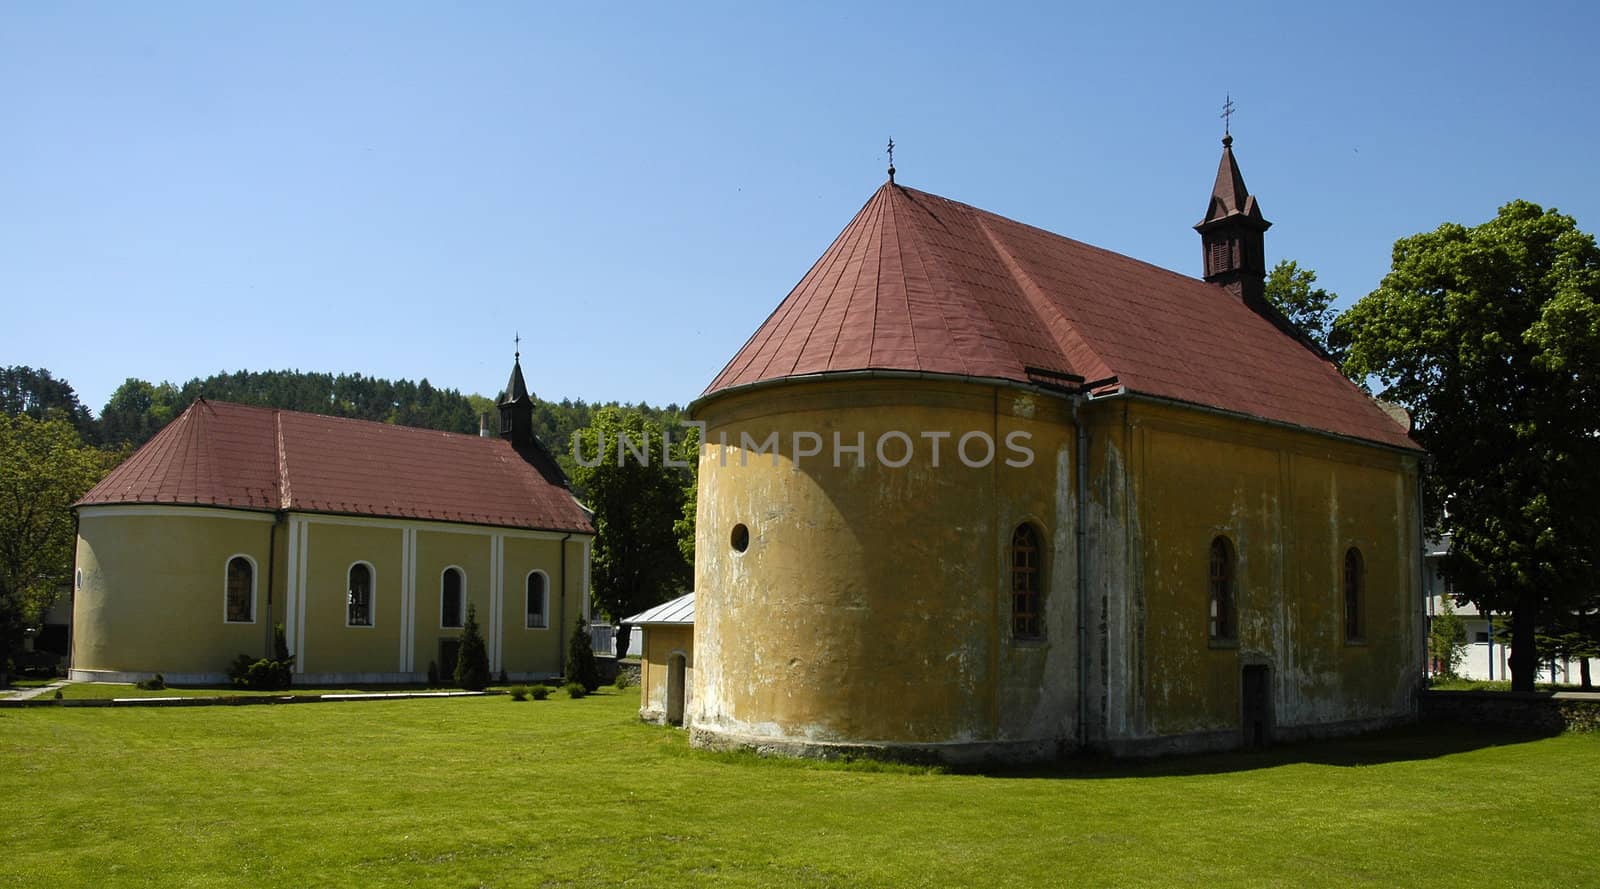 old chapels in Svidnik, Slovakia;
clear blue sky, green grass